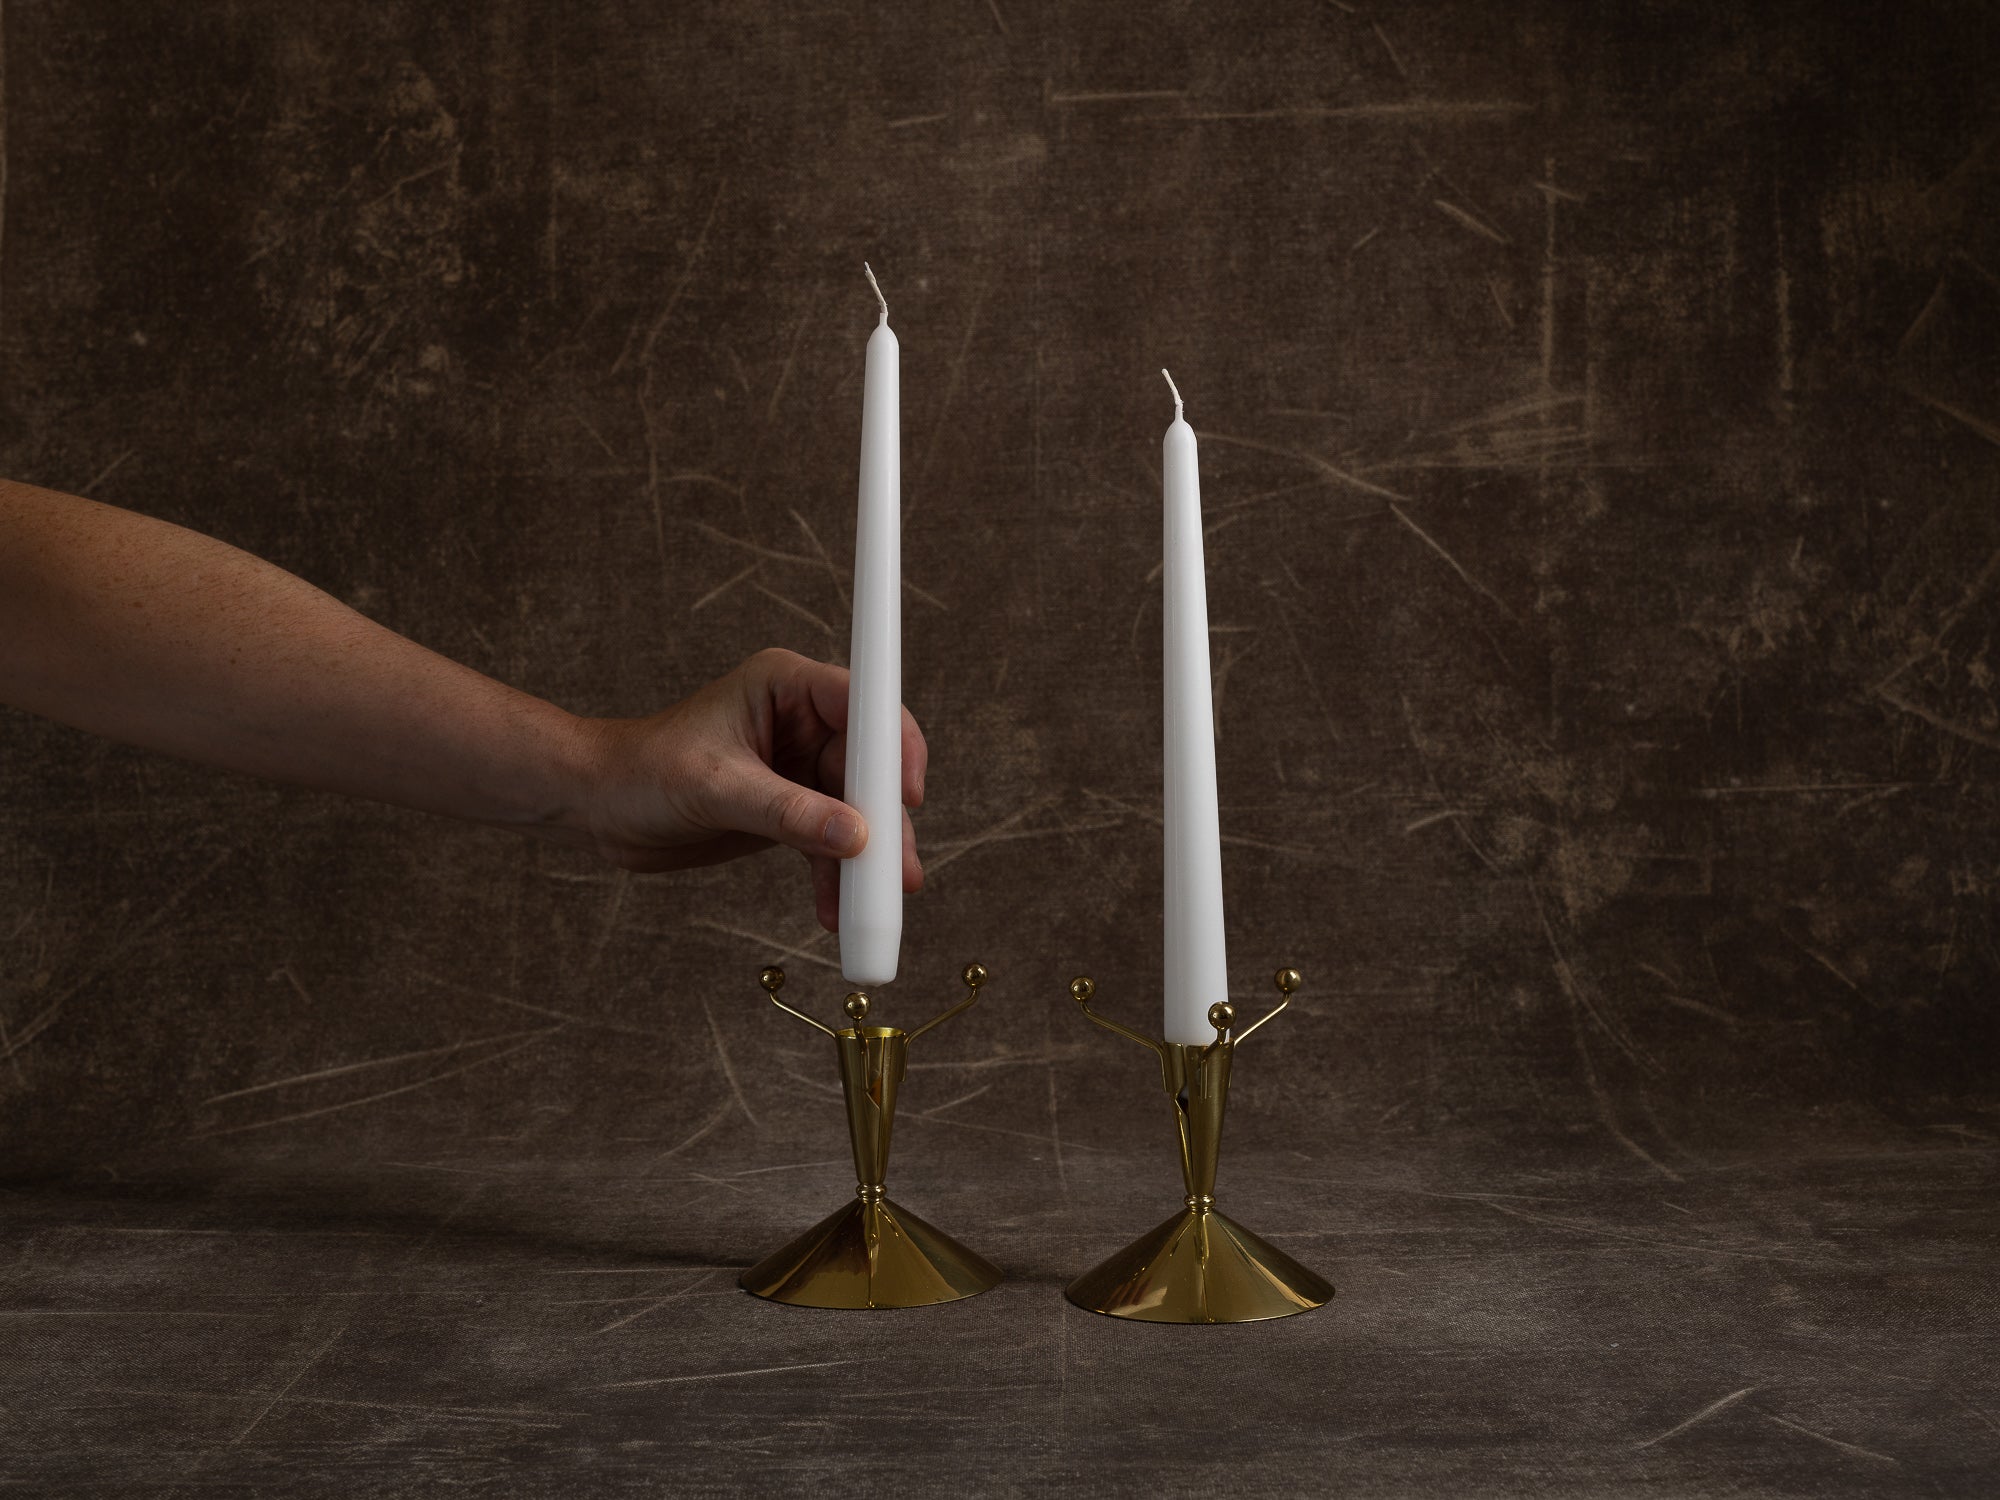 Paire de flambeaux par Gunnar Ander pour Ystad Metall, Suède (vers 1957)..Set of 2 candle holders by Gunnar Ander for Ystad Metall, Sweden (circa 1957)